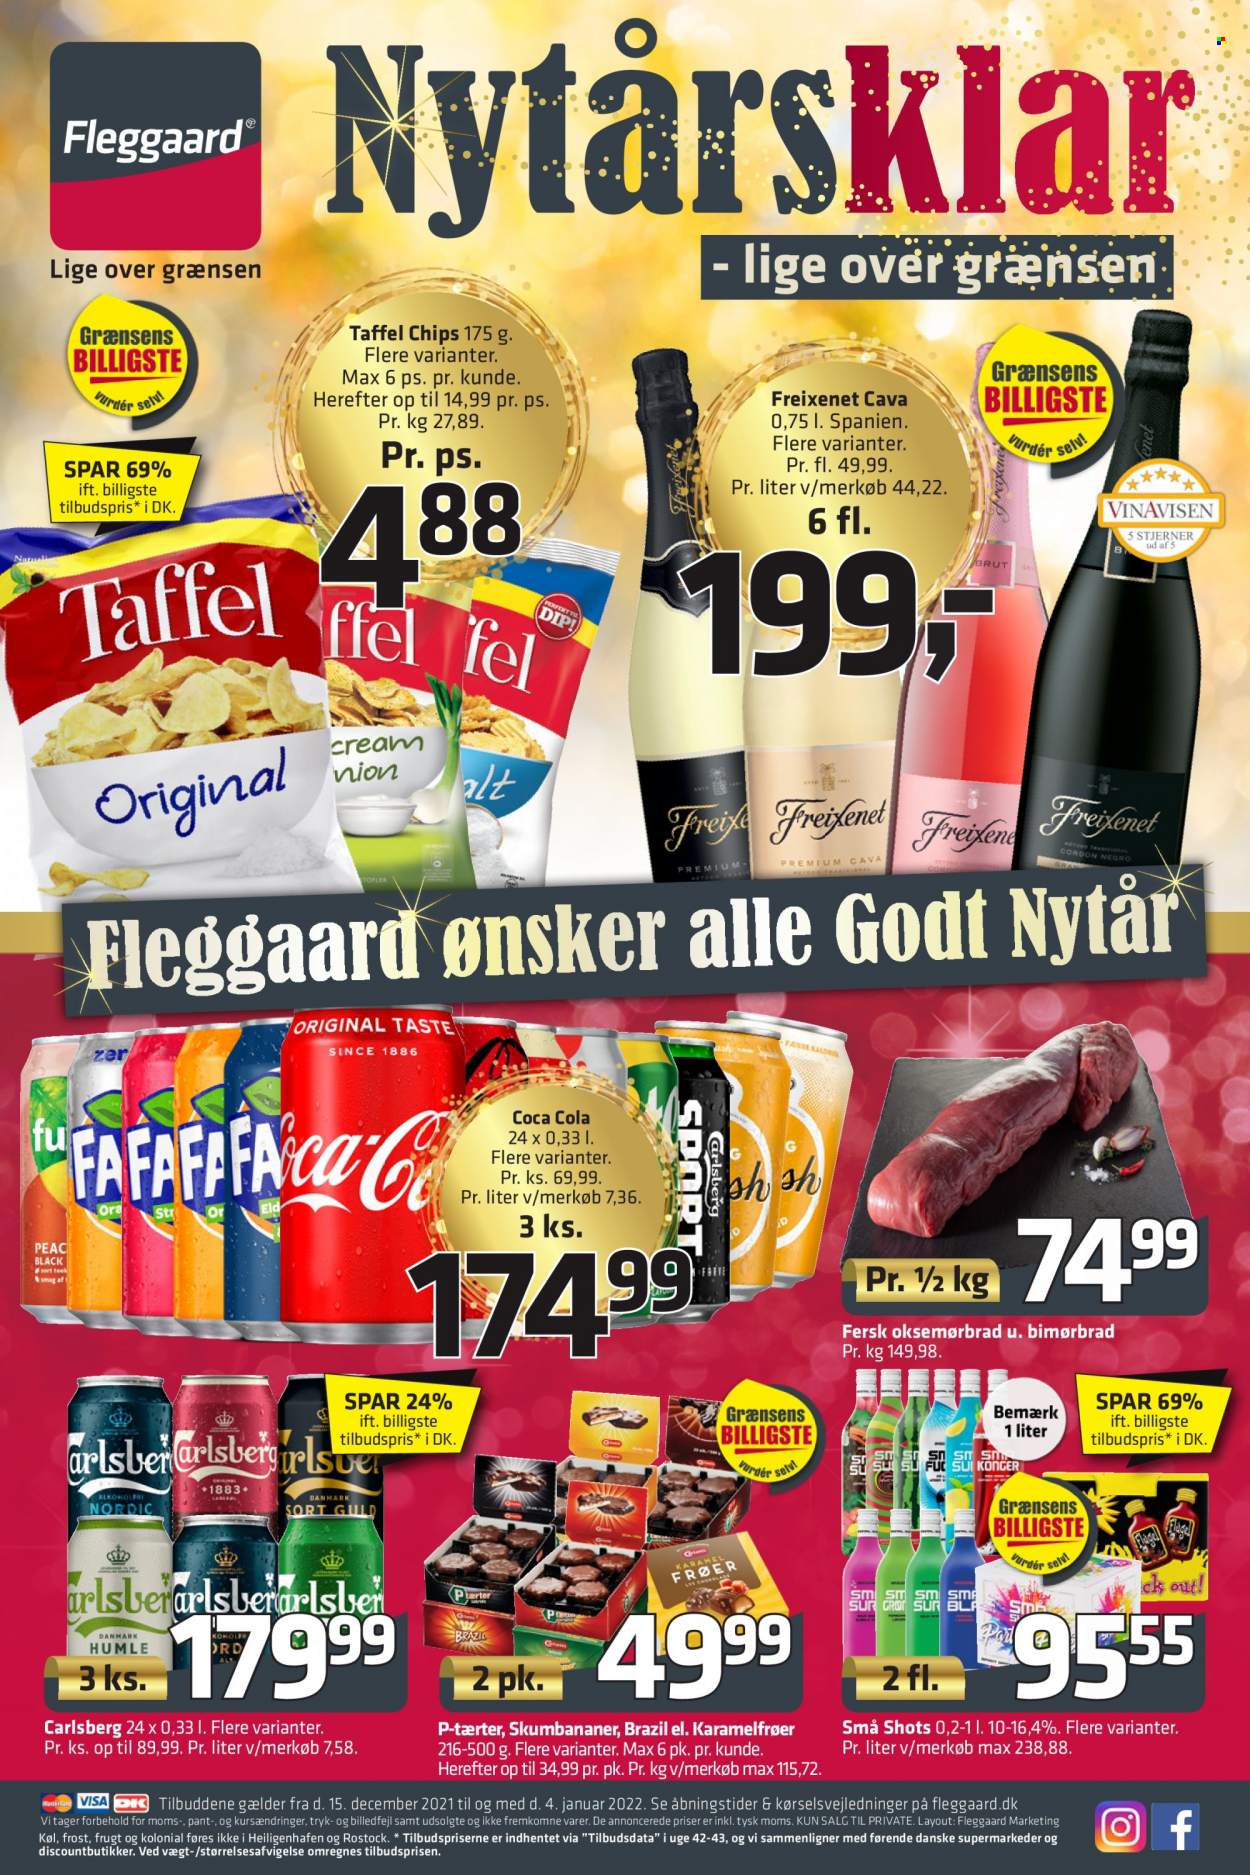 Fleggaard tilbud  - 15.12.2021 - 04.01.2022 - tilbudsprodukter - oksemørbrad, oksekød, Carlsberg, øl, chips, Coca-Cola. Side 1.